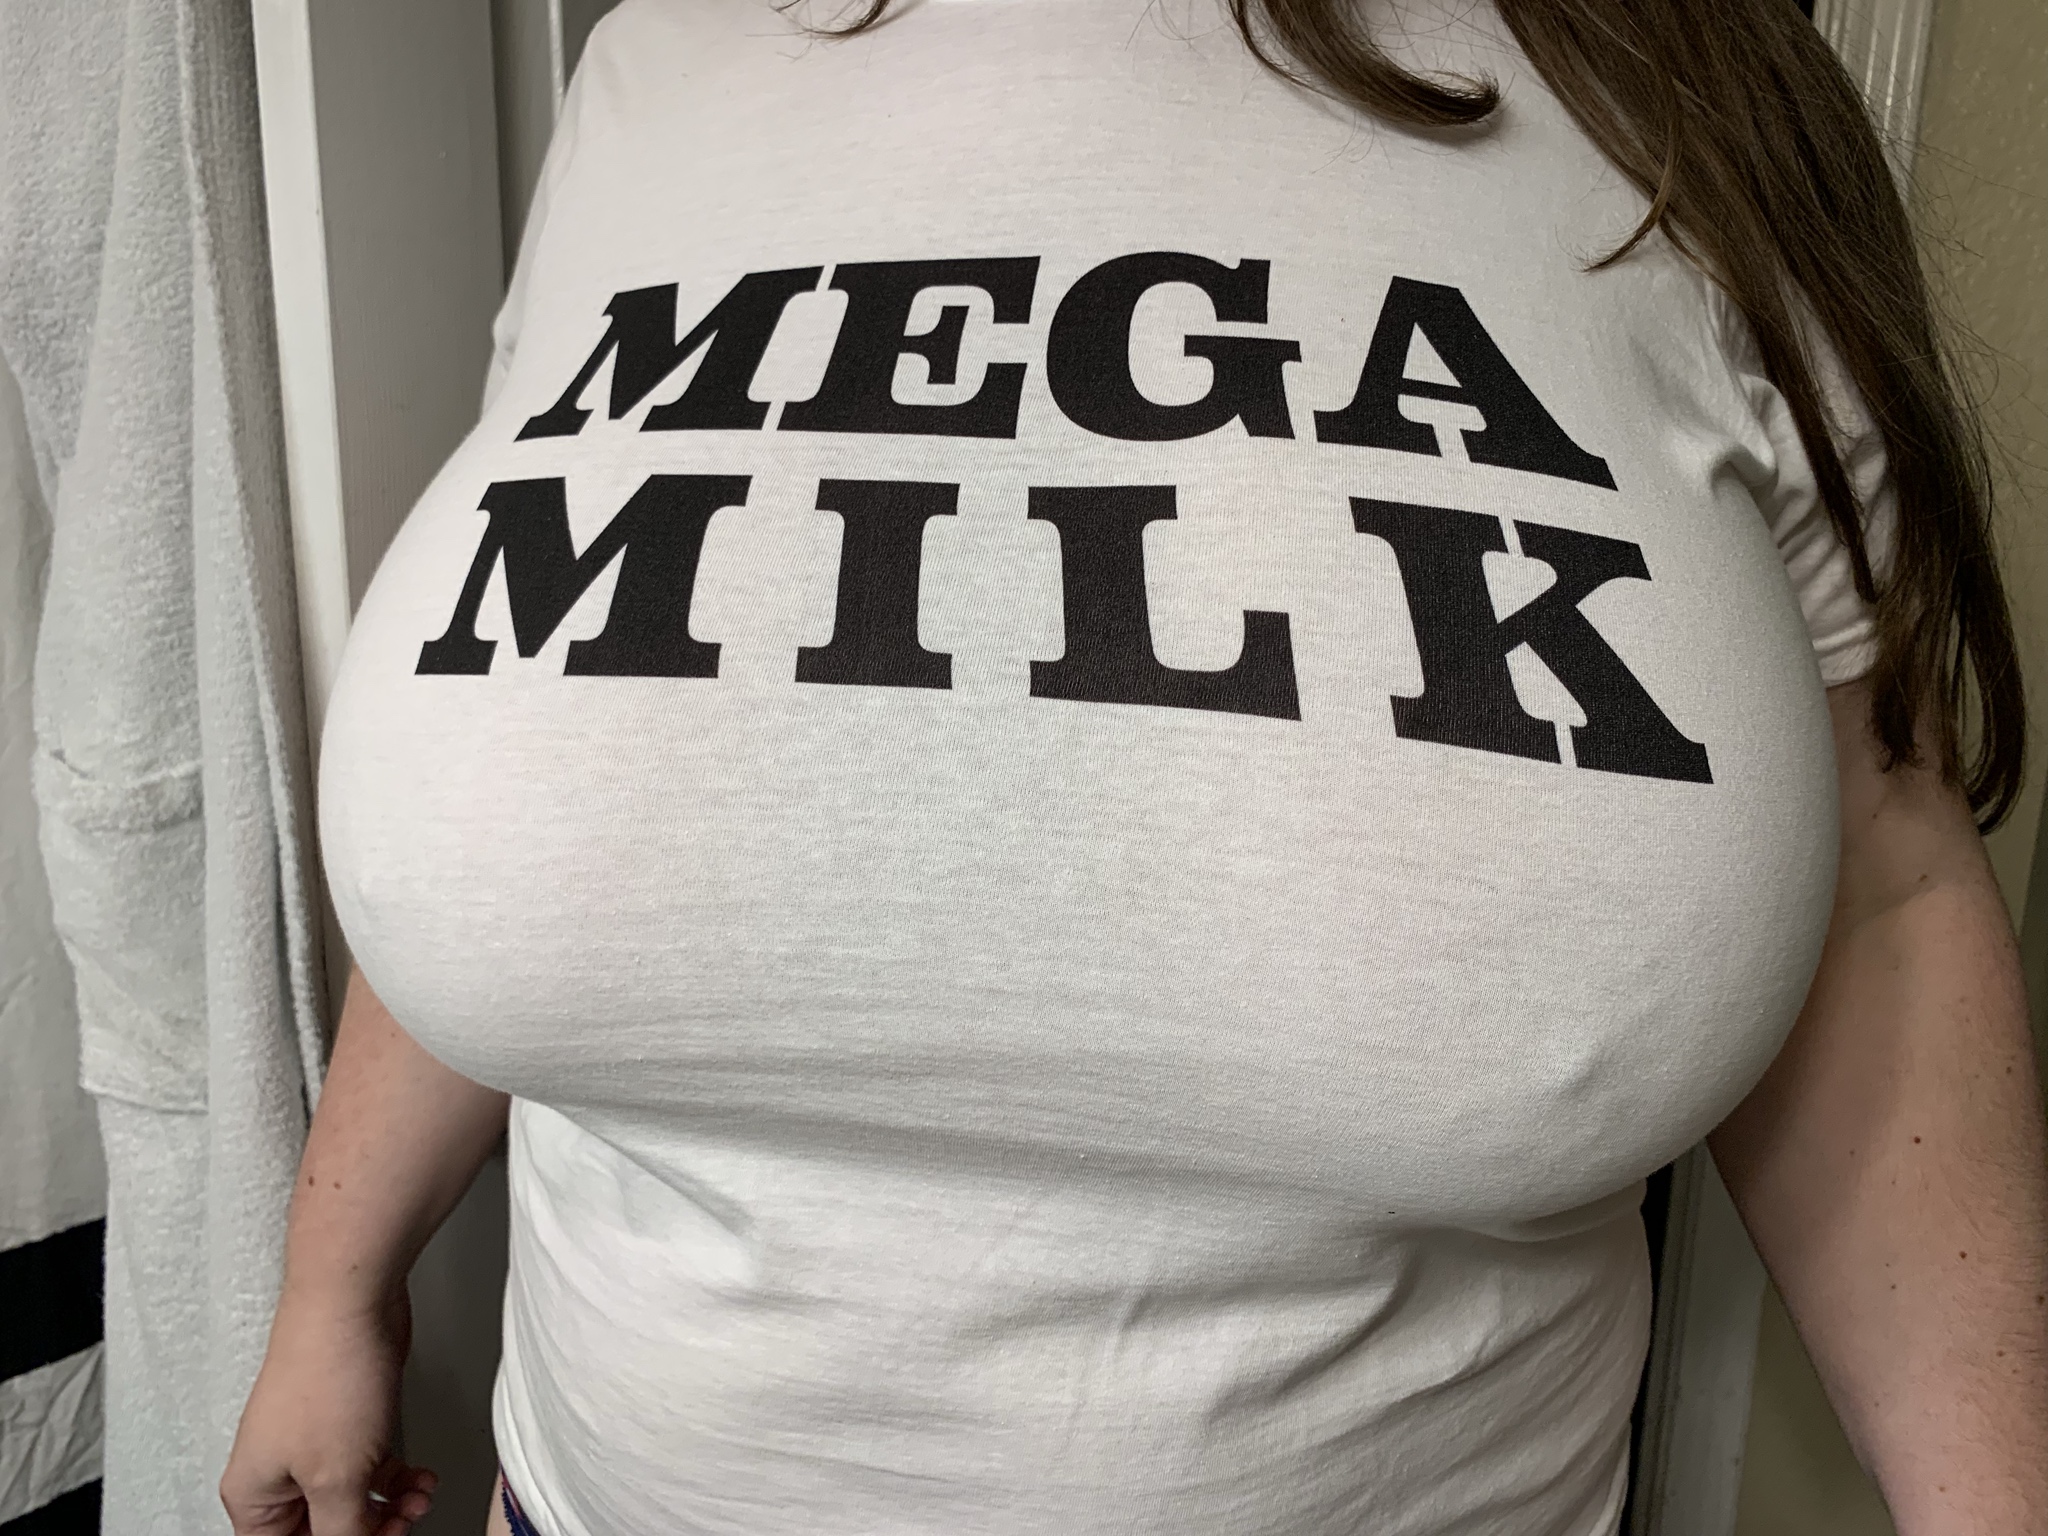 Milk the boob